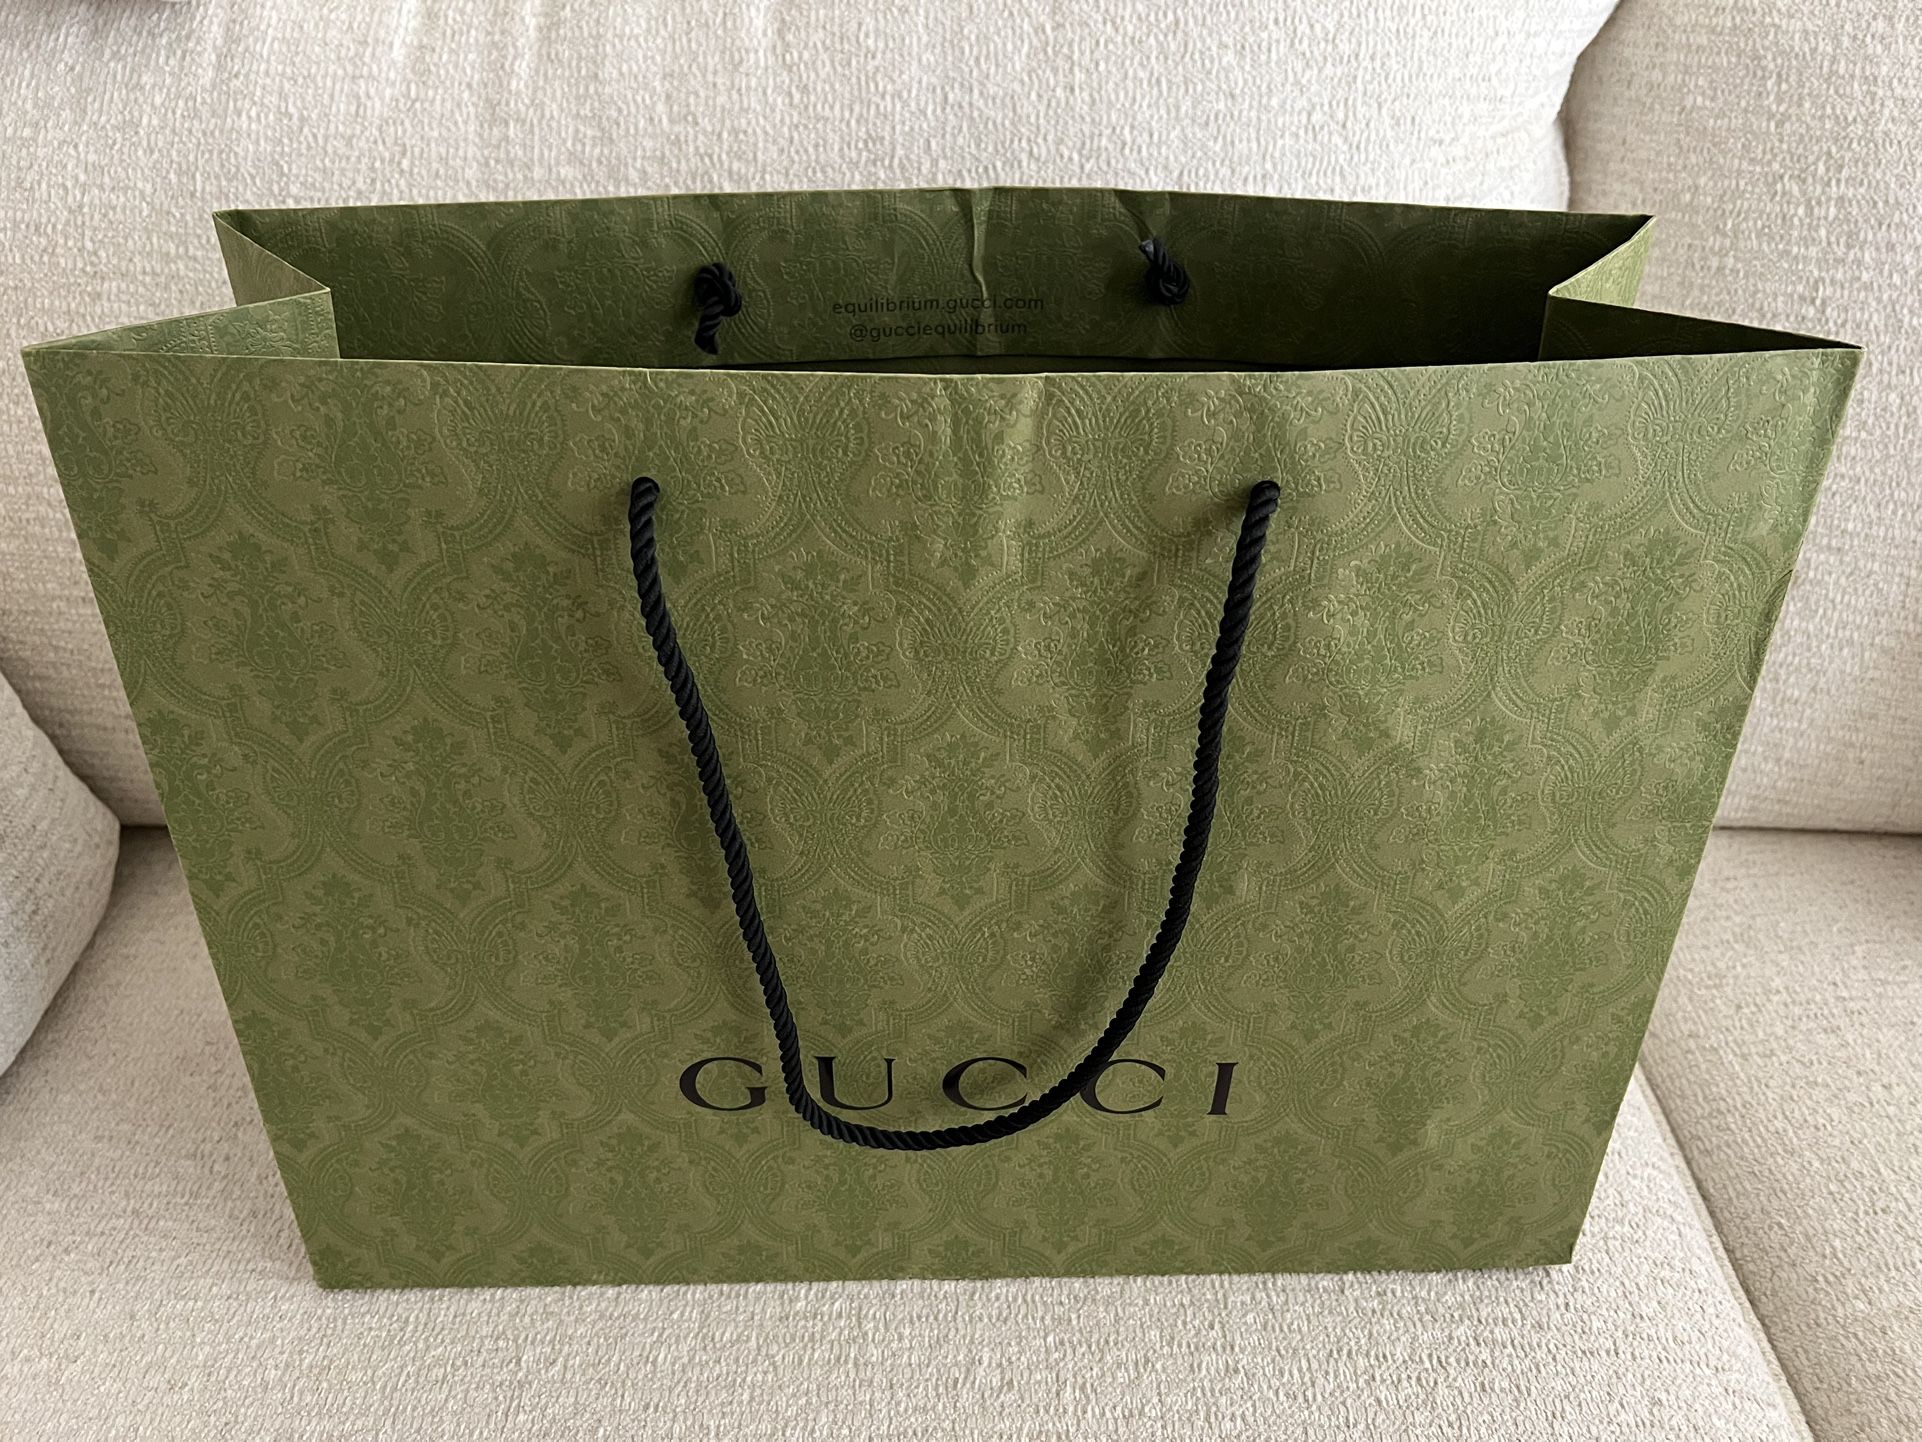 Gucci Bag And Show Box 